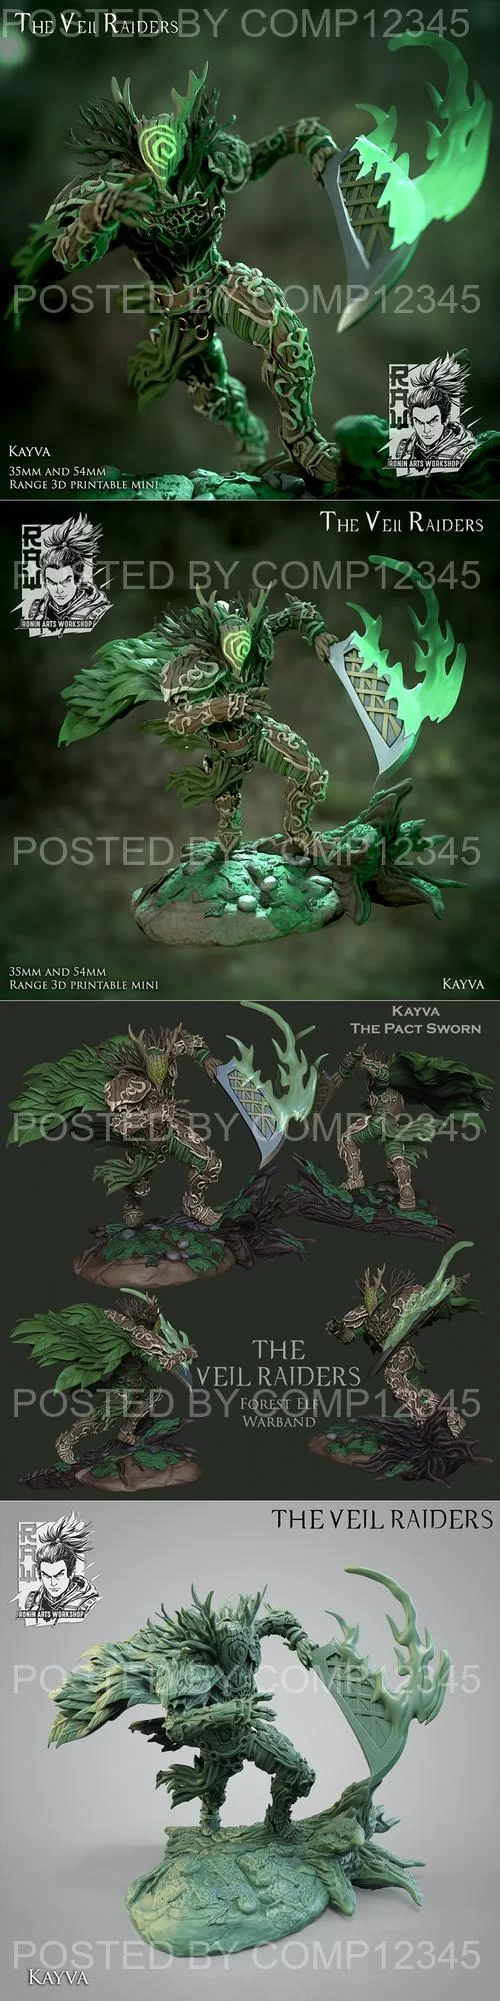 3D Print Model - Ronin Arts Workshop - Kayva The Pact Sworn - Forest Elf Living Armor